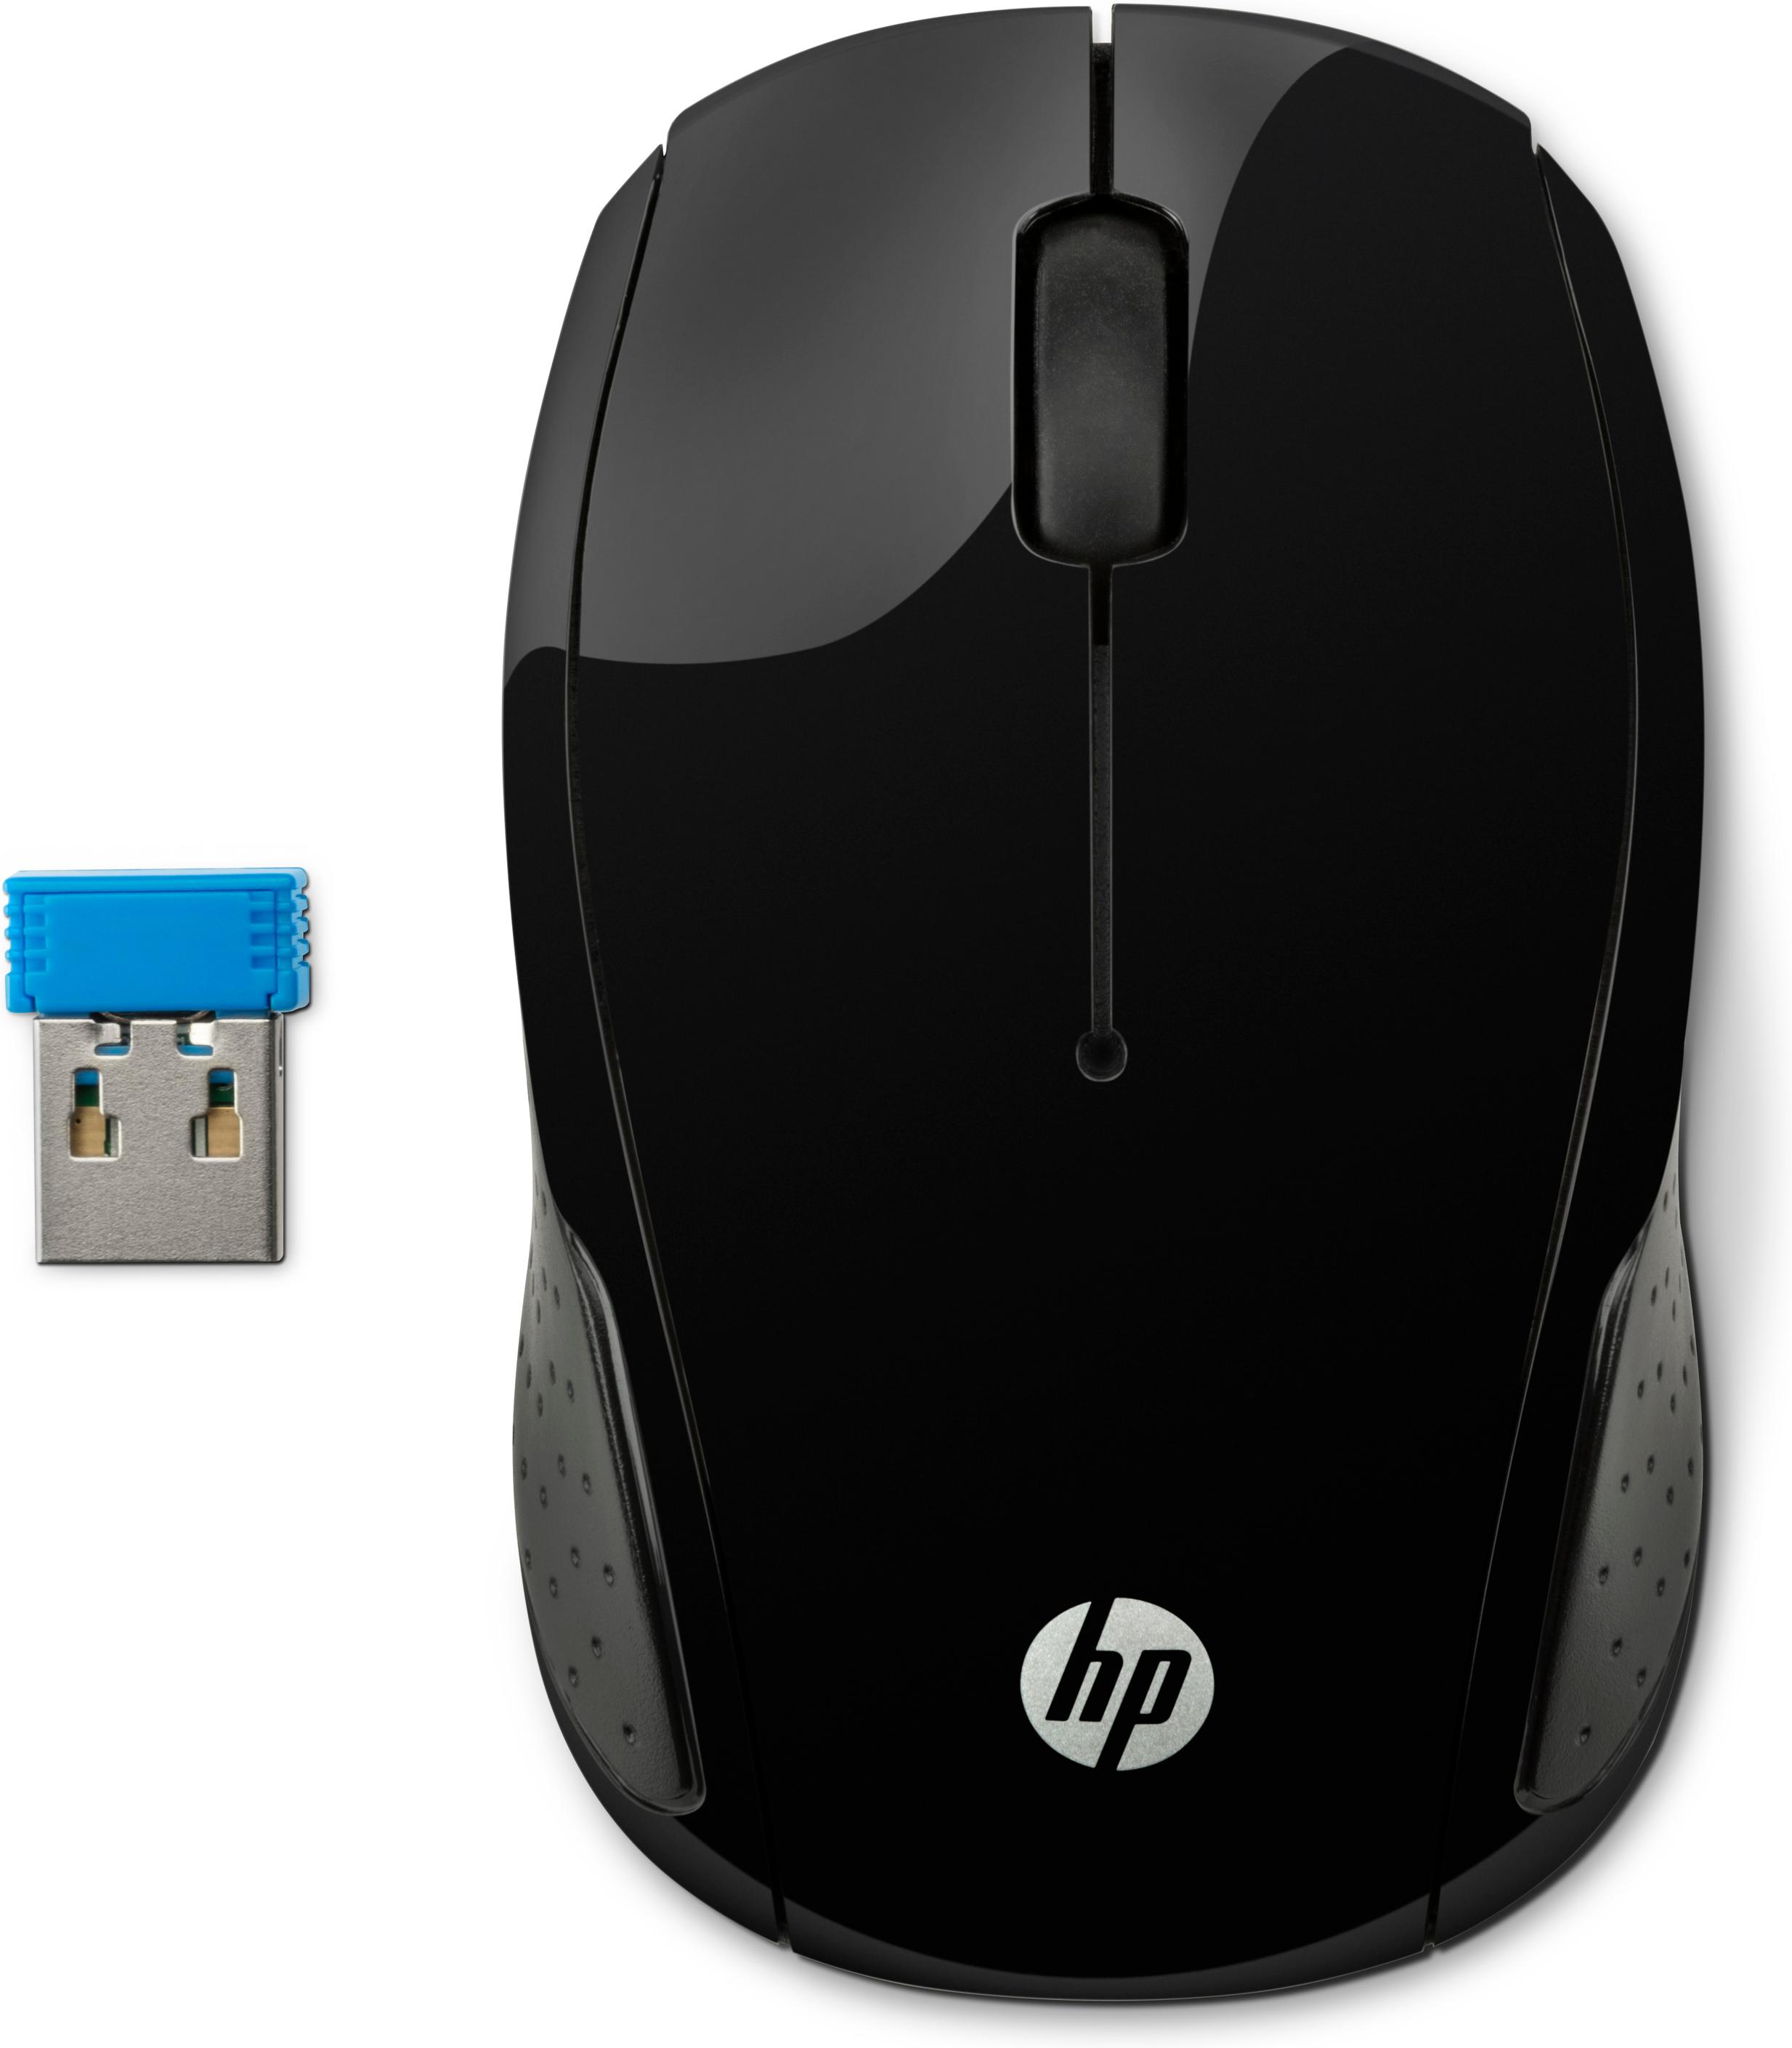 Offerta per HP - Mouse wireless 200 a 12,99€ in Comet